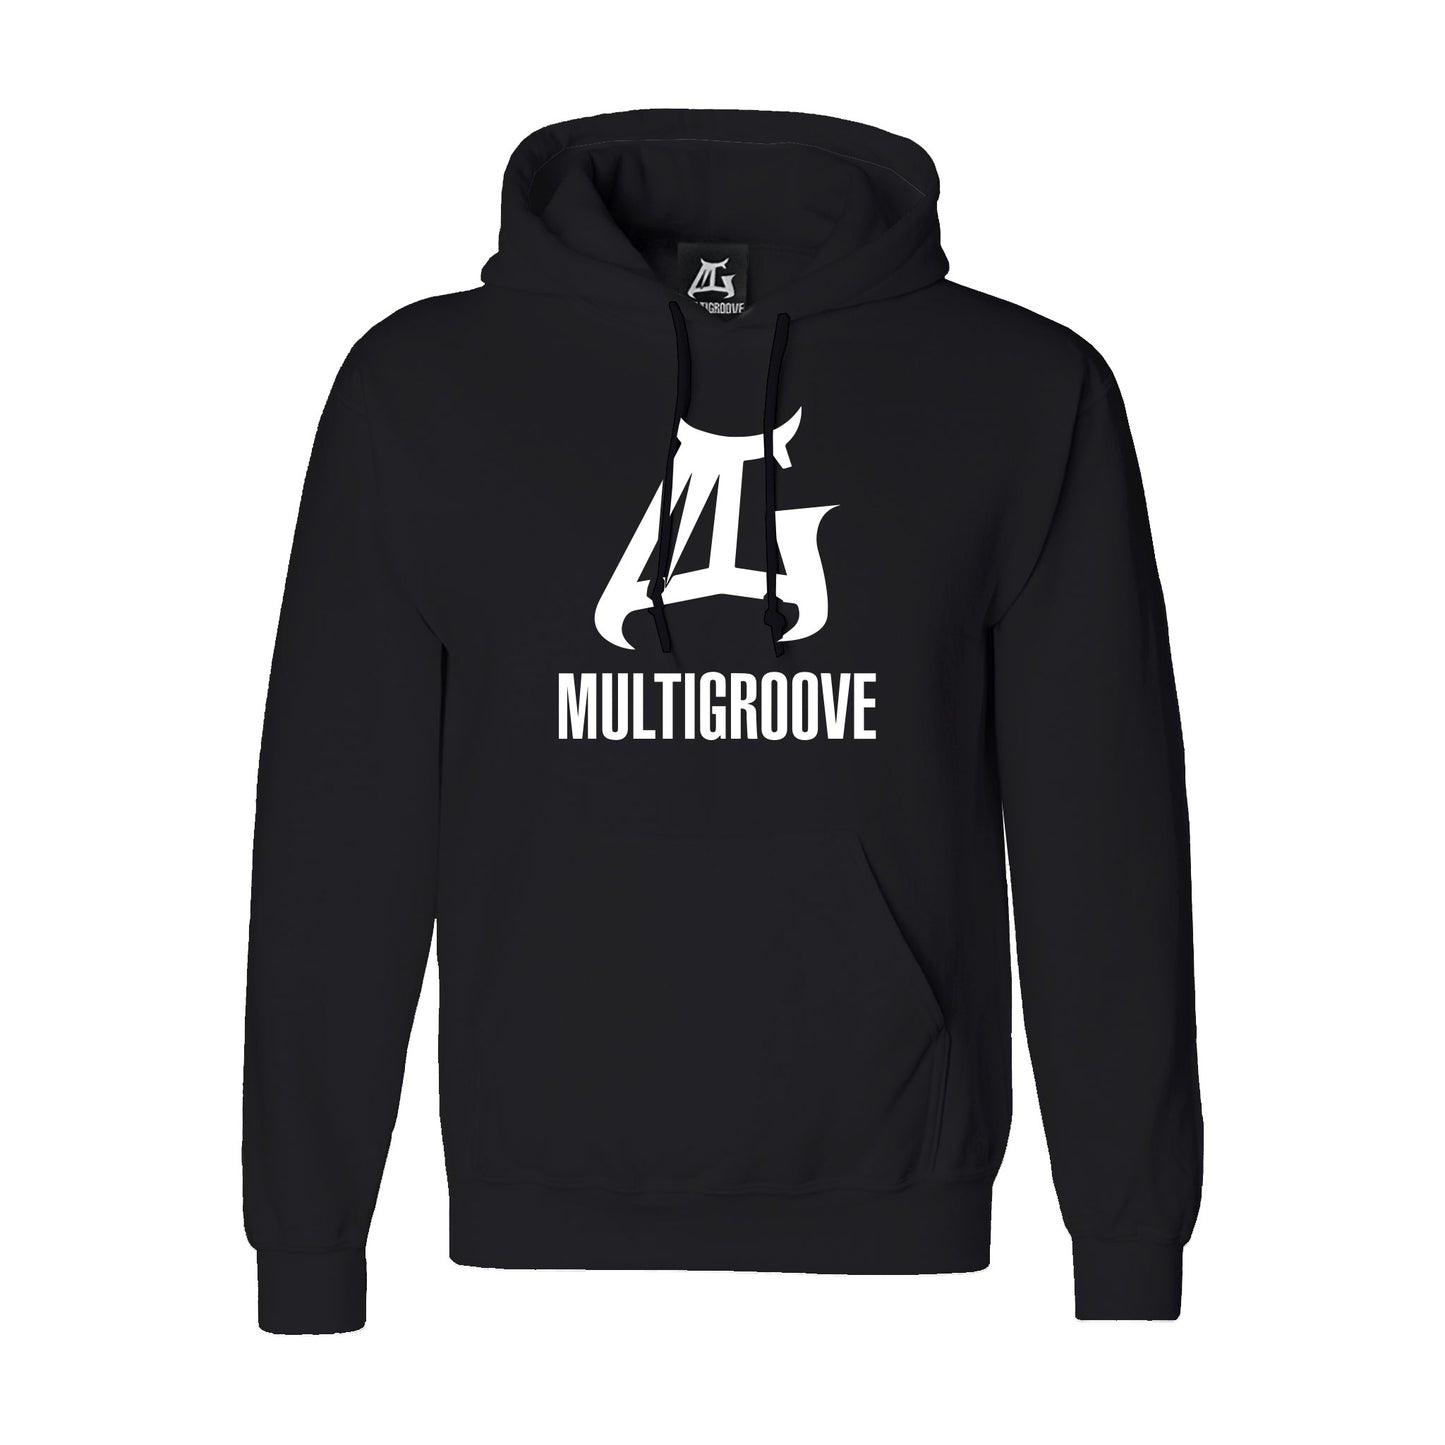 Multigroove Basic Hoodie black with large logo